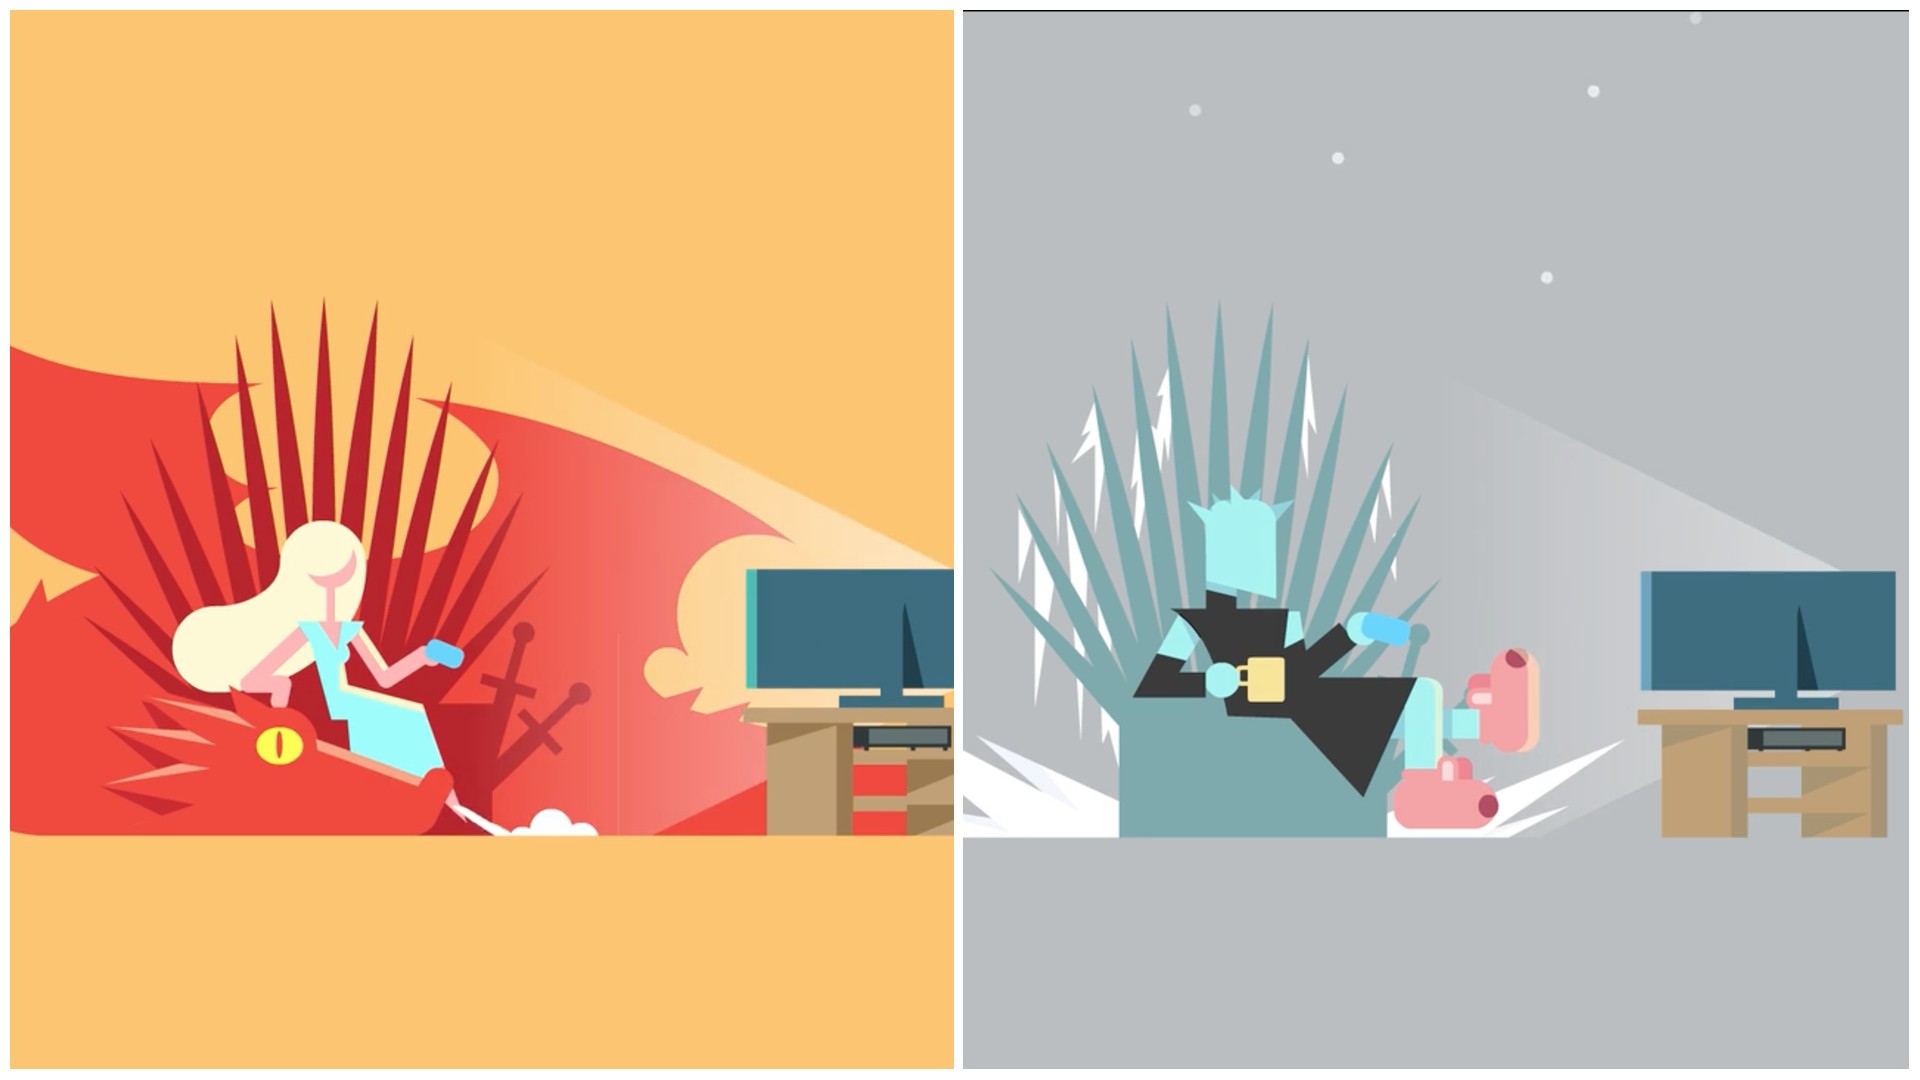 Game of Thrones' GIFs by illustrator Eran Mendel